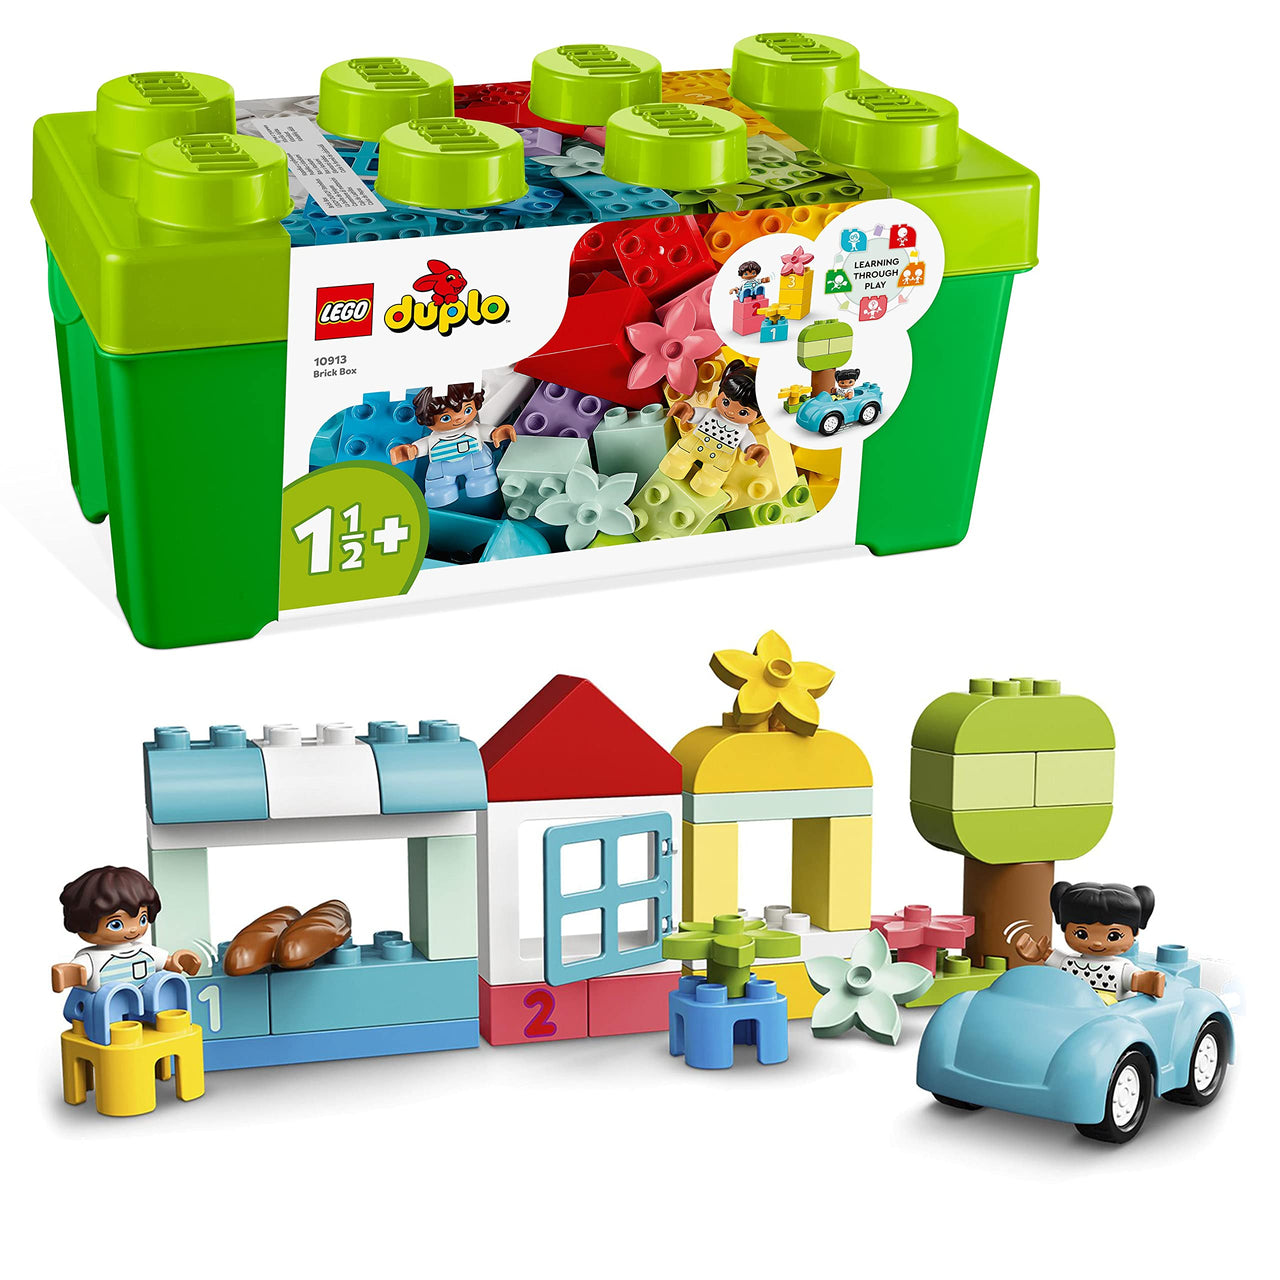 LEGO 10913 DUPLO Classic Brick Box Building Set with Storage